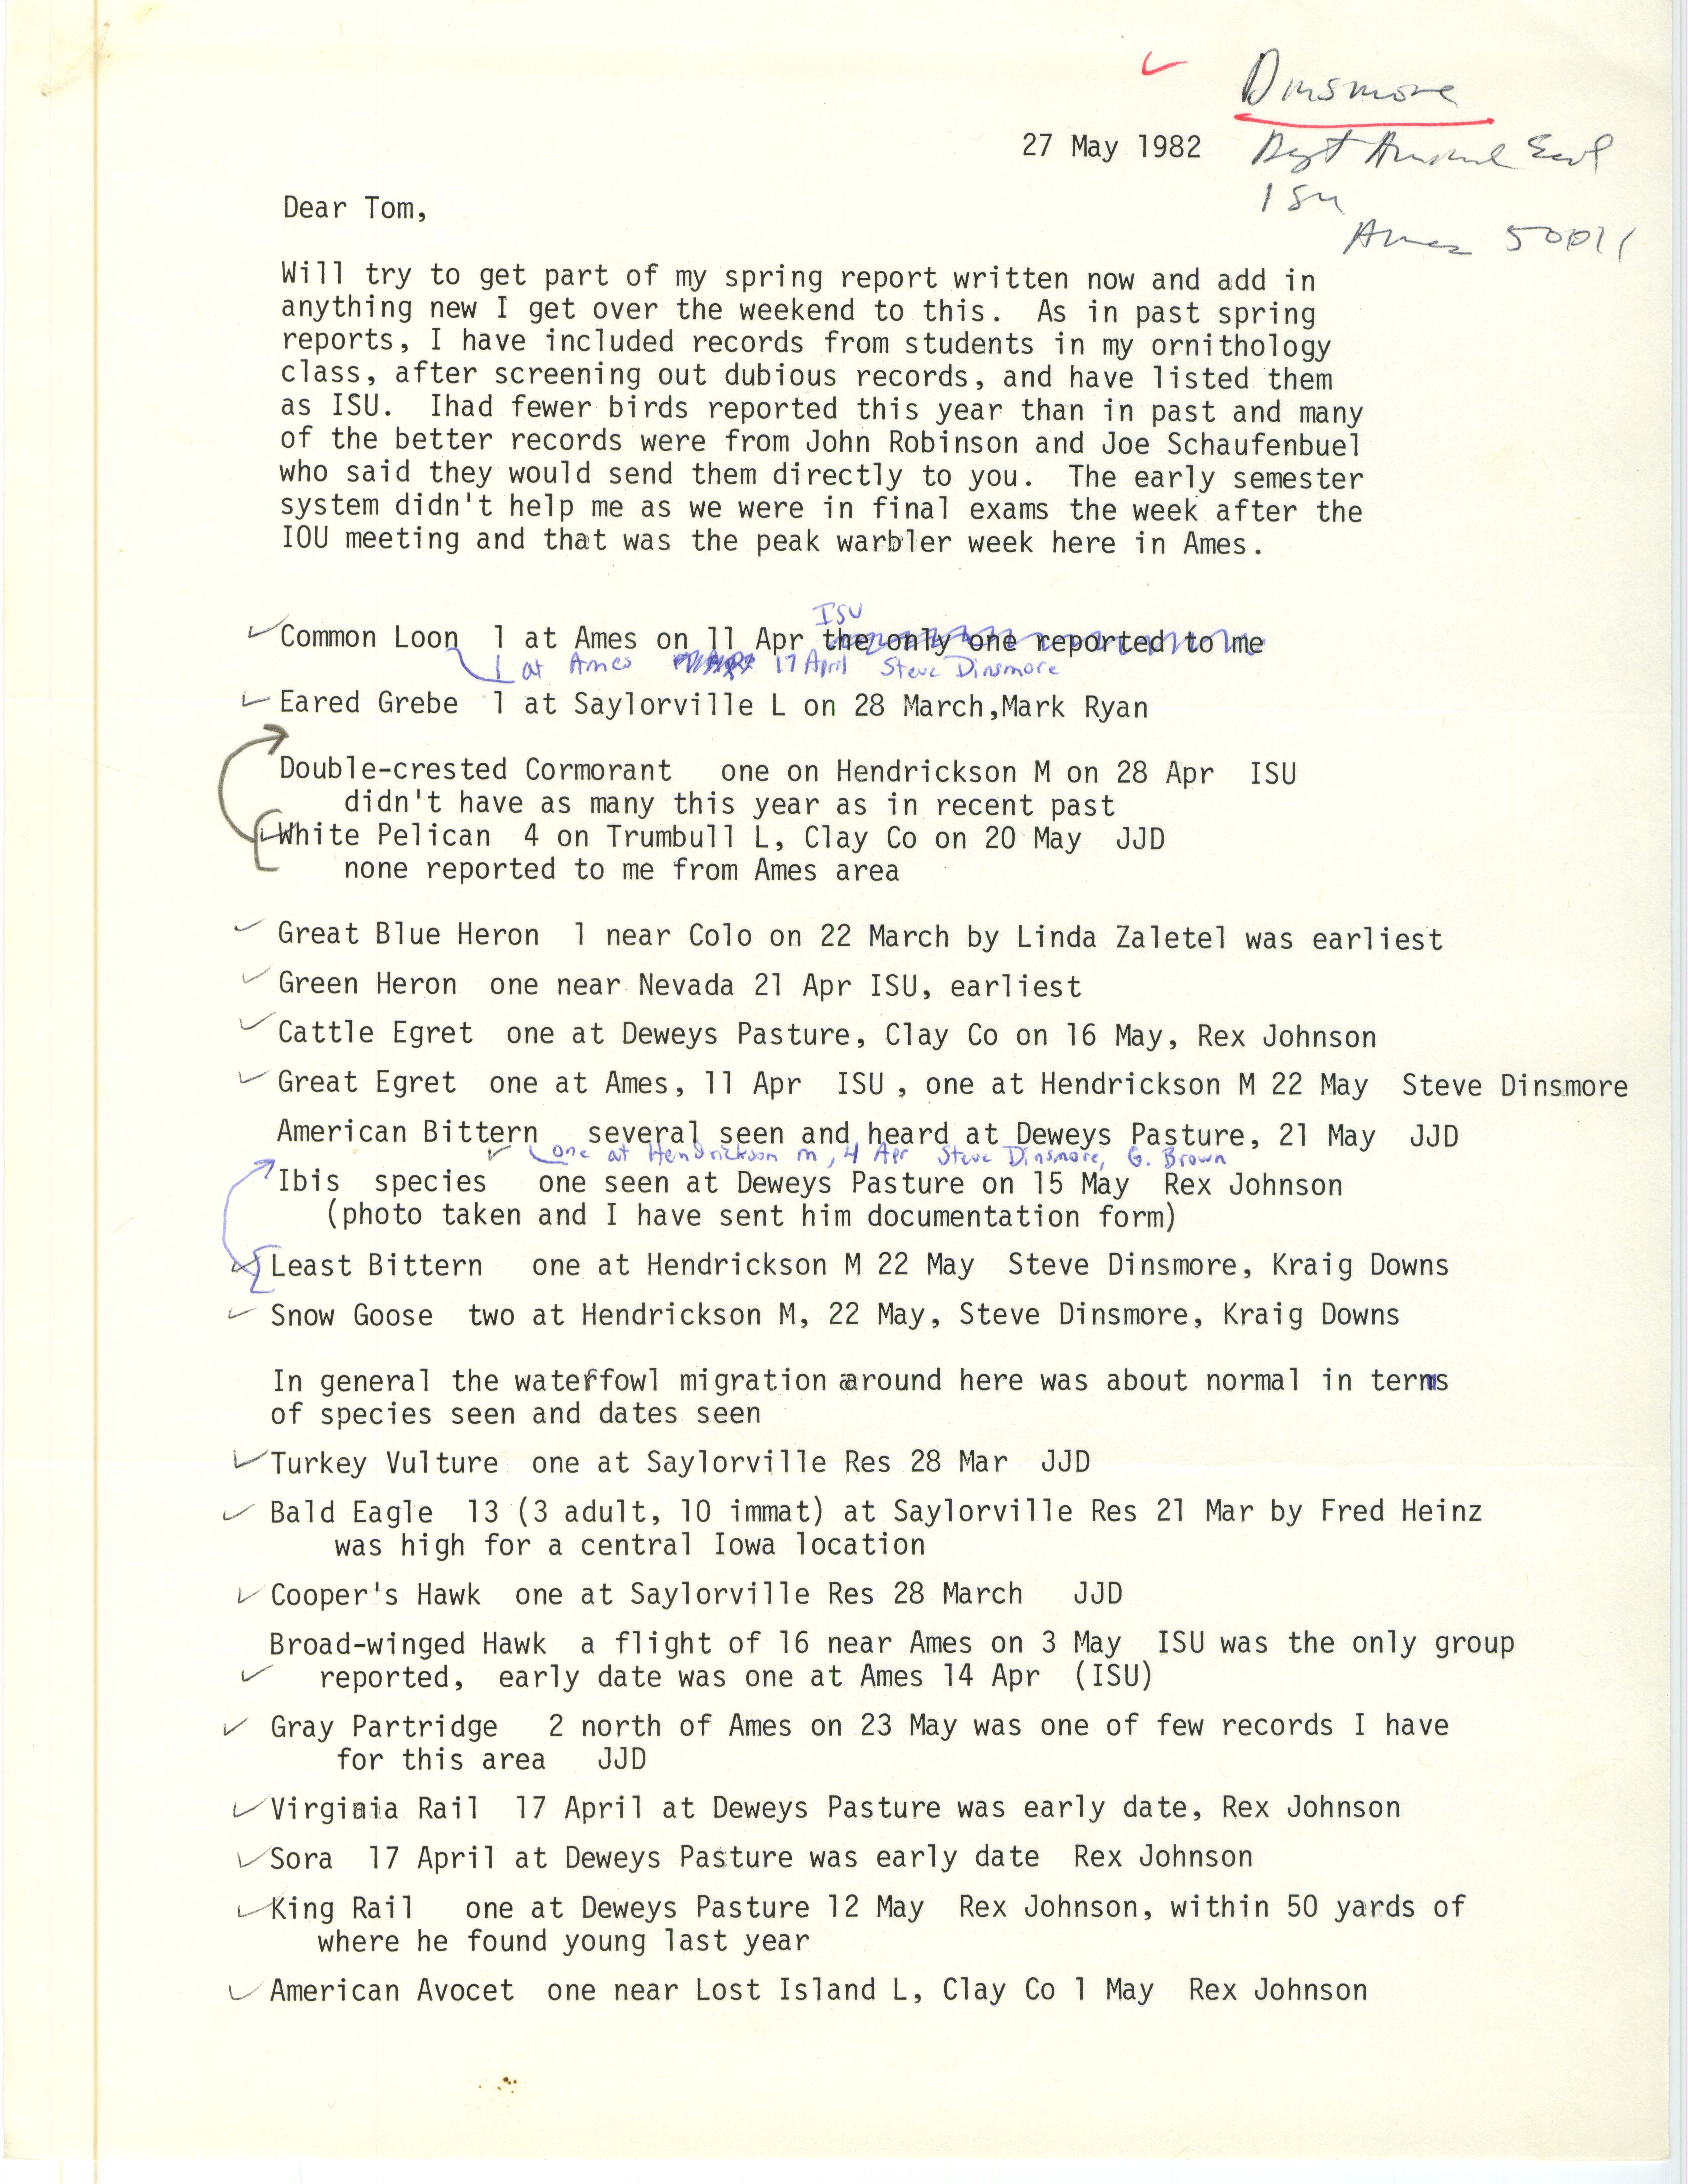 James J. Dinsmore letter to Thomas H. Kent regarding field notes, May 27, 1982